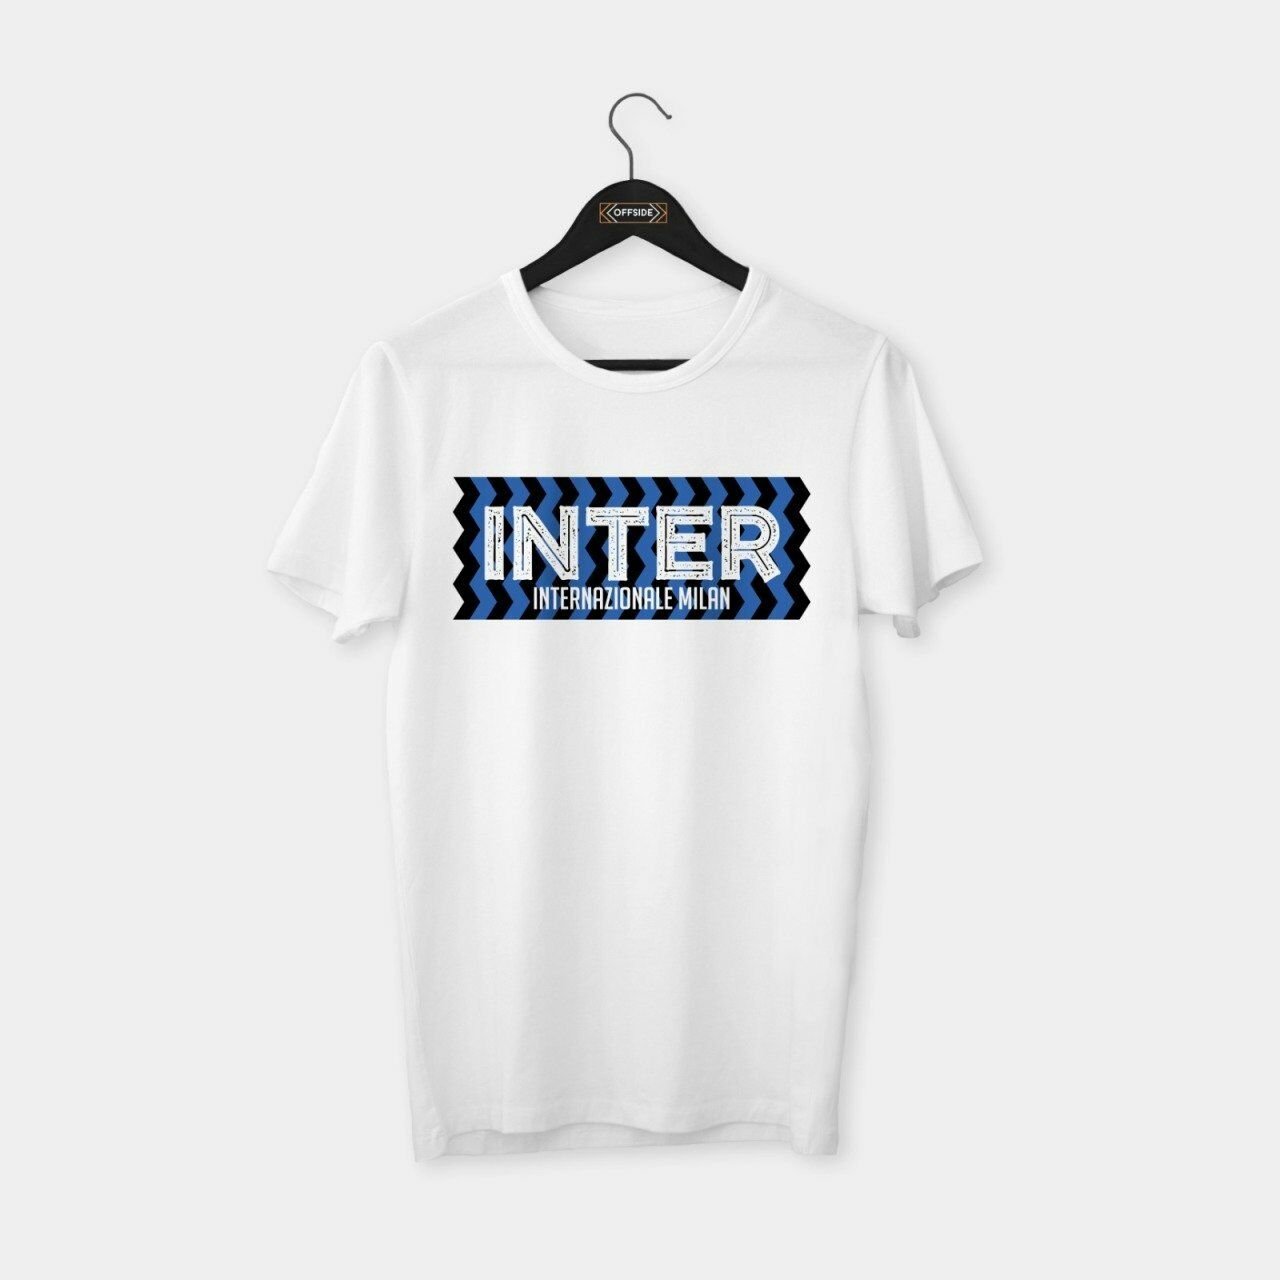 Inter - Internazionale Milan T-shirt